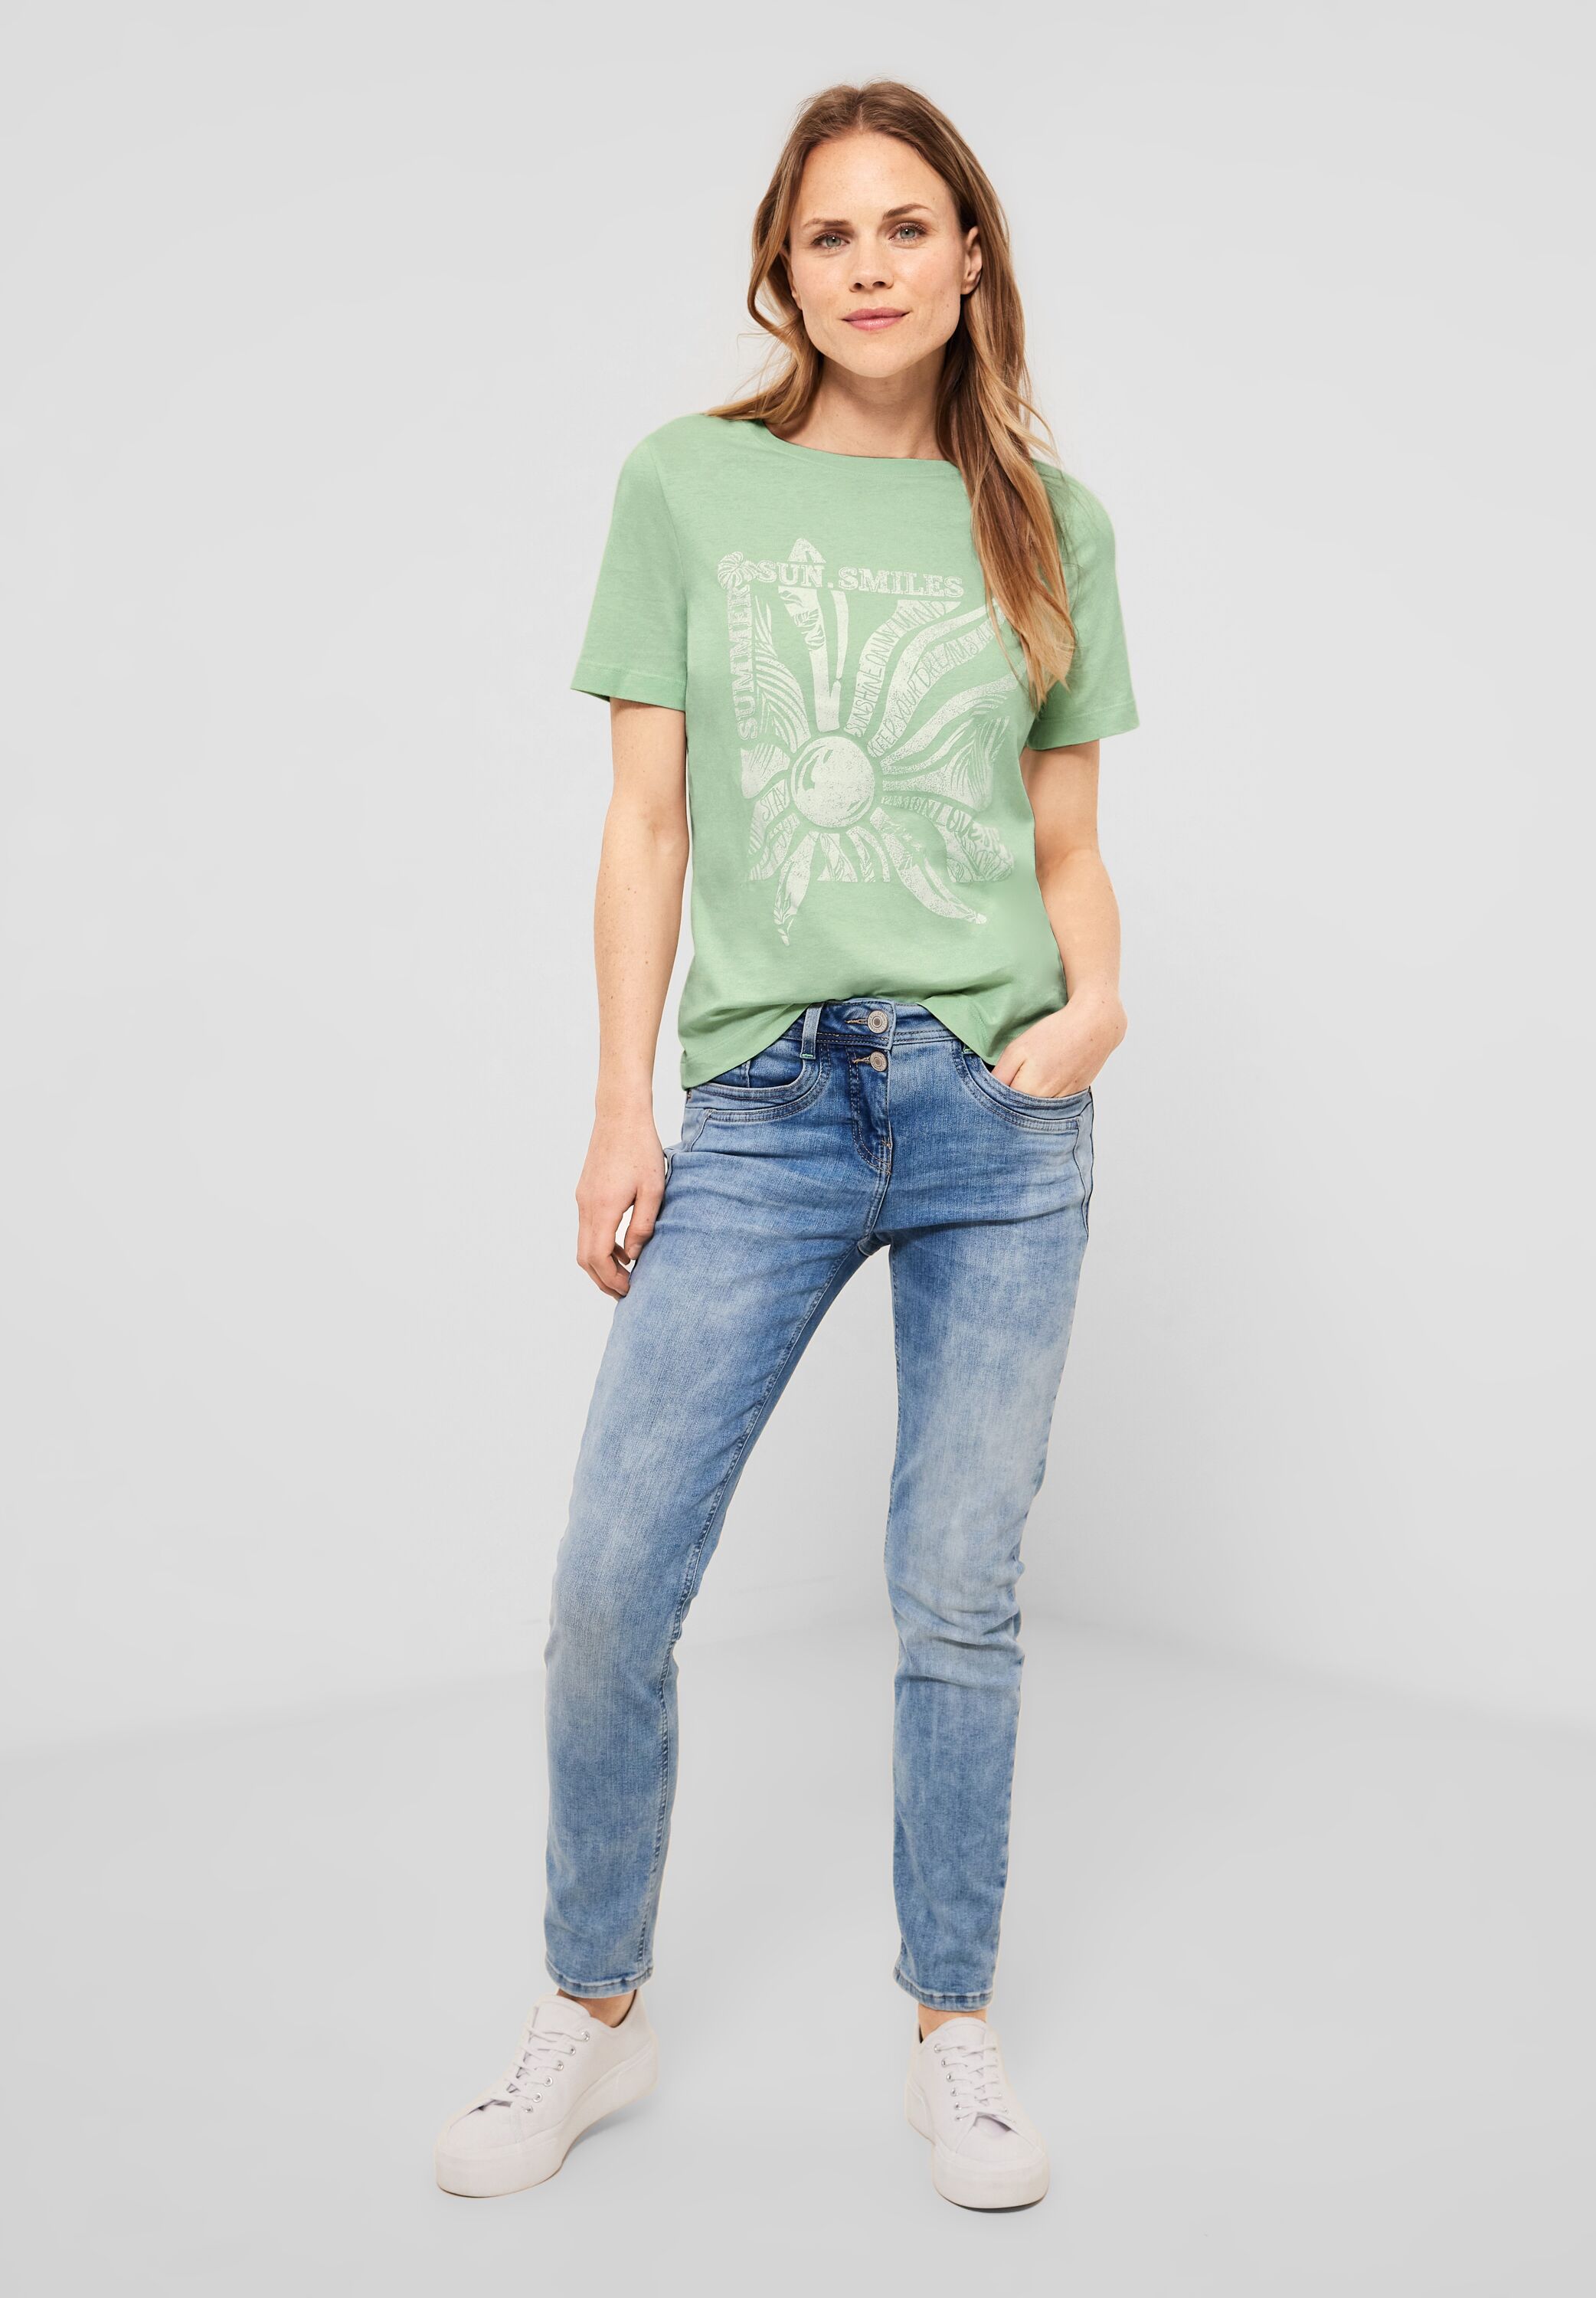 CECIL T-Shirt in im Green Fresh SALE CONCEPT Salvia reduziert B320051-24851 Mode 